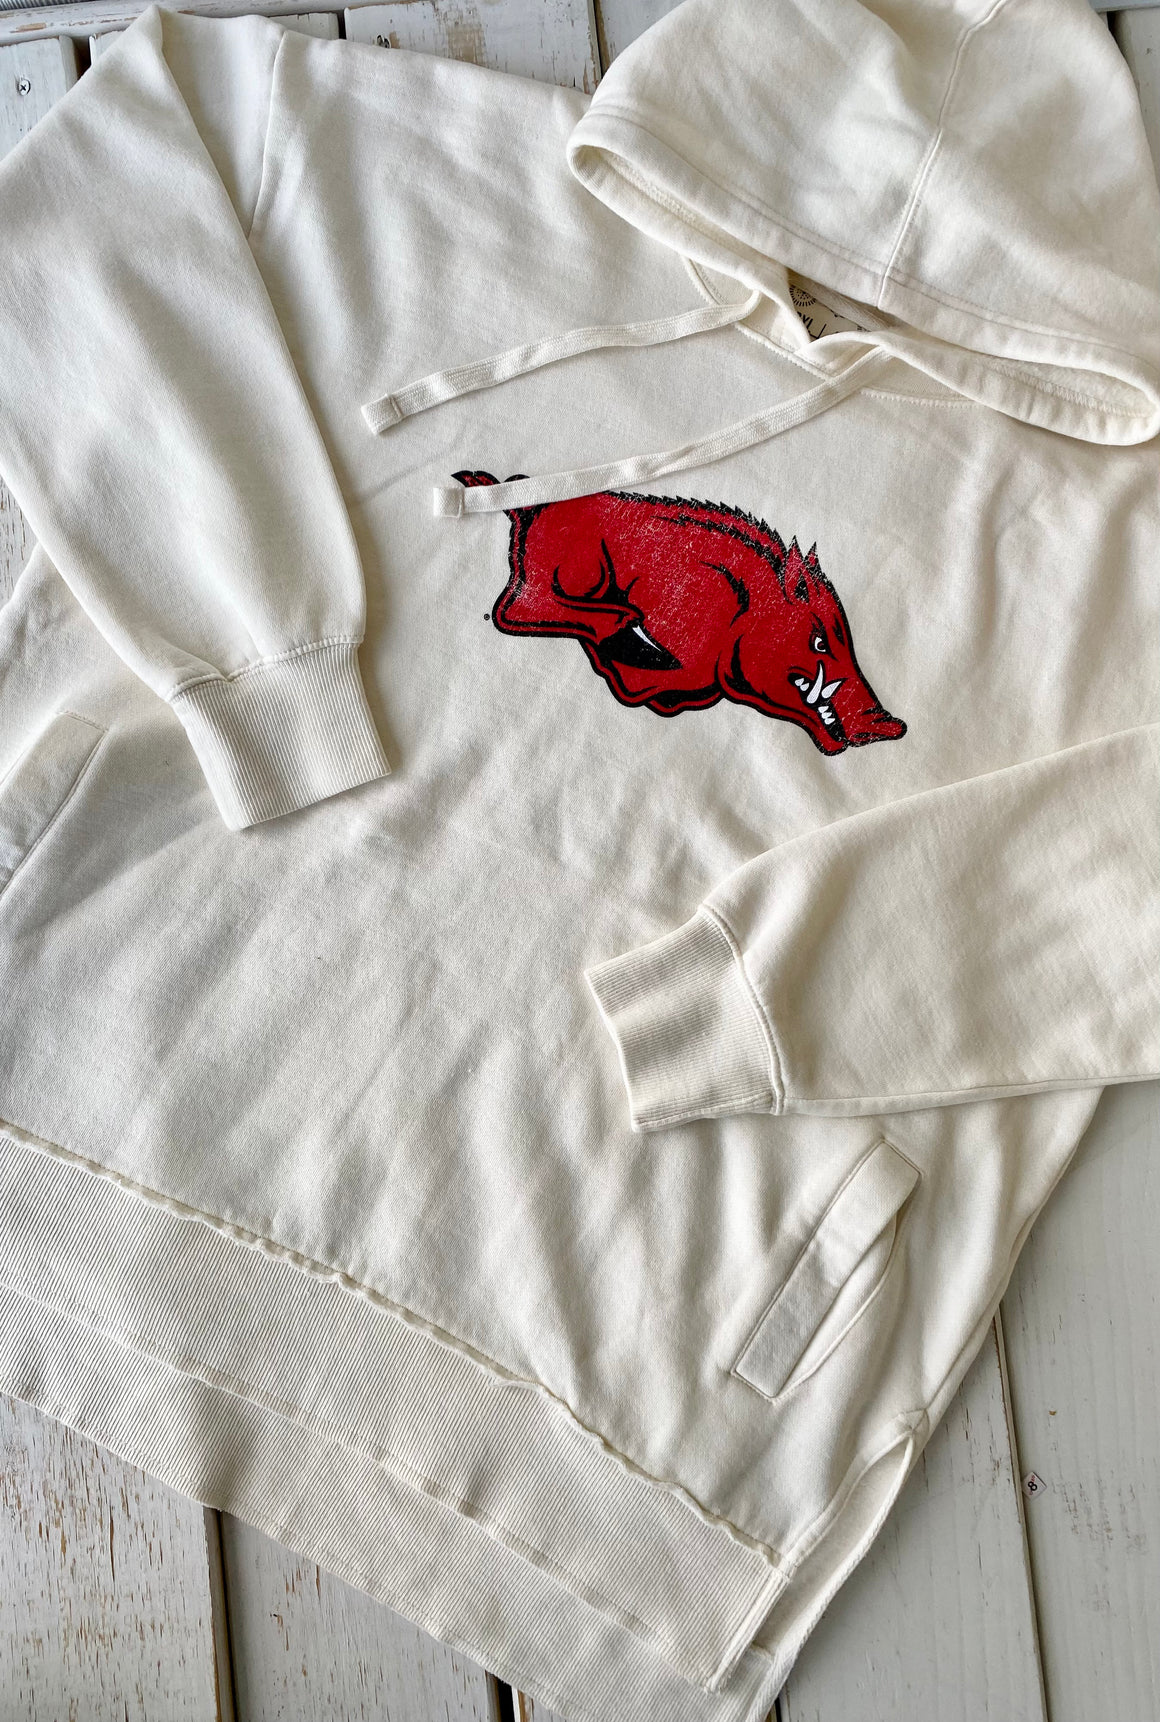 Let’s Go Hogs Distressed Logo Arkansas Razorback Hoodie